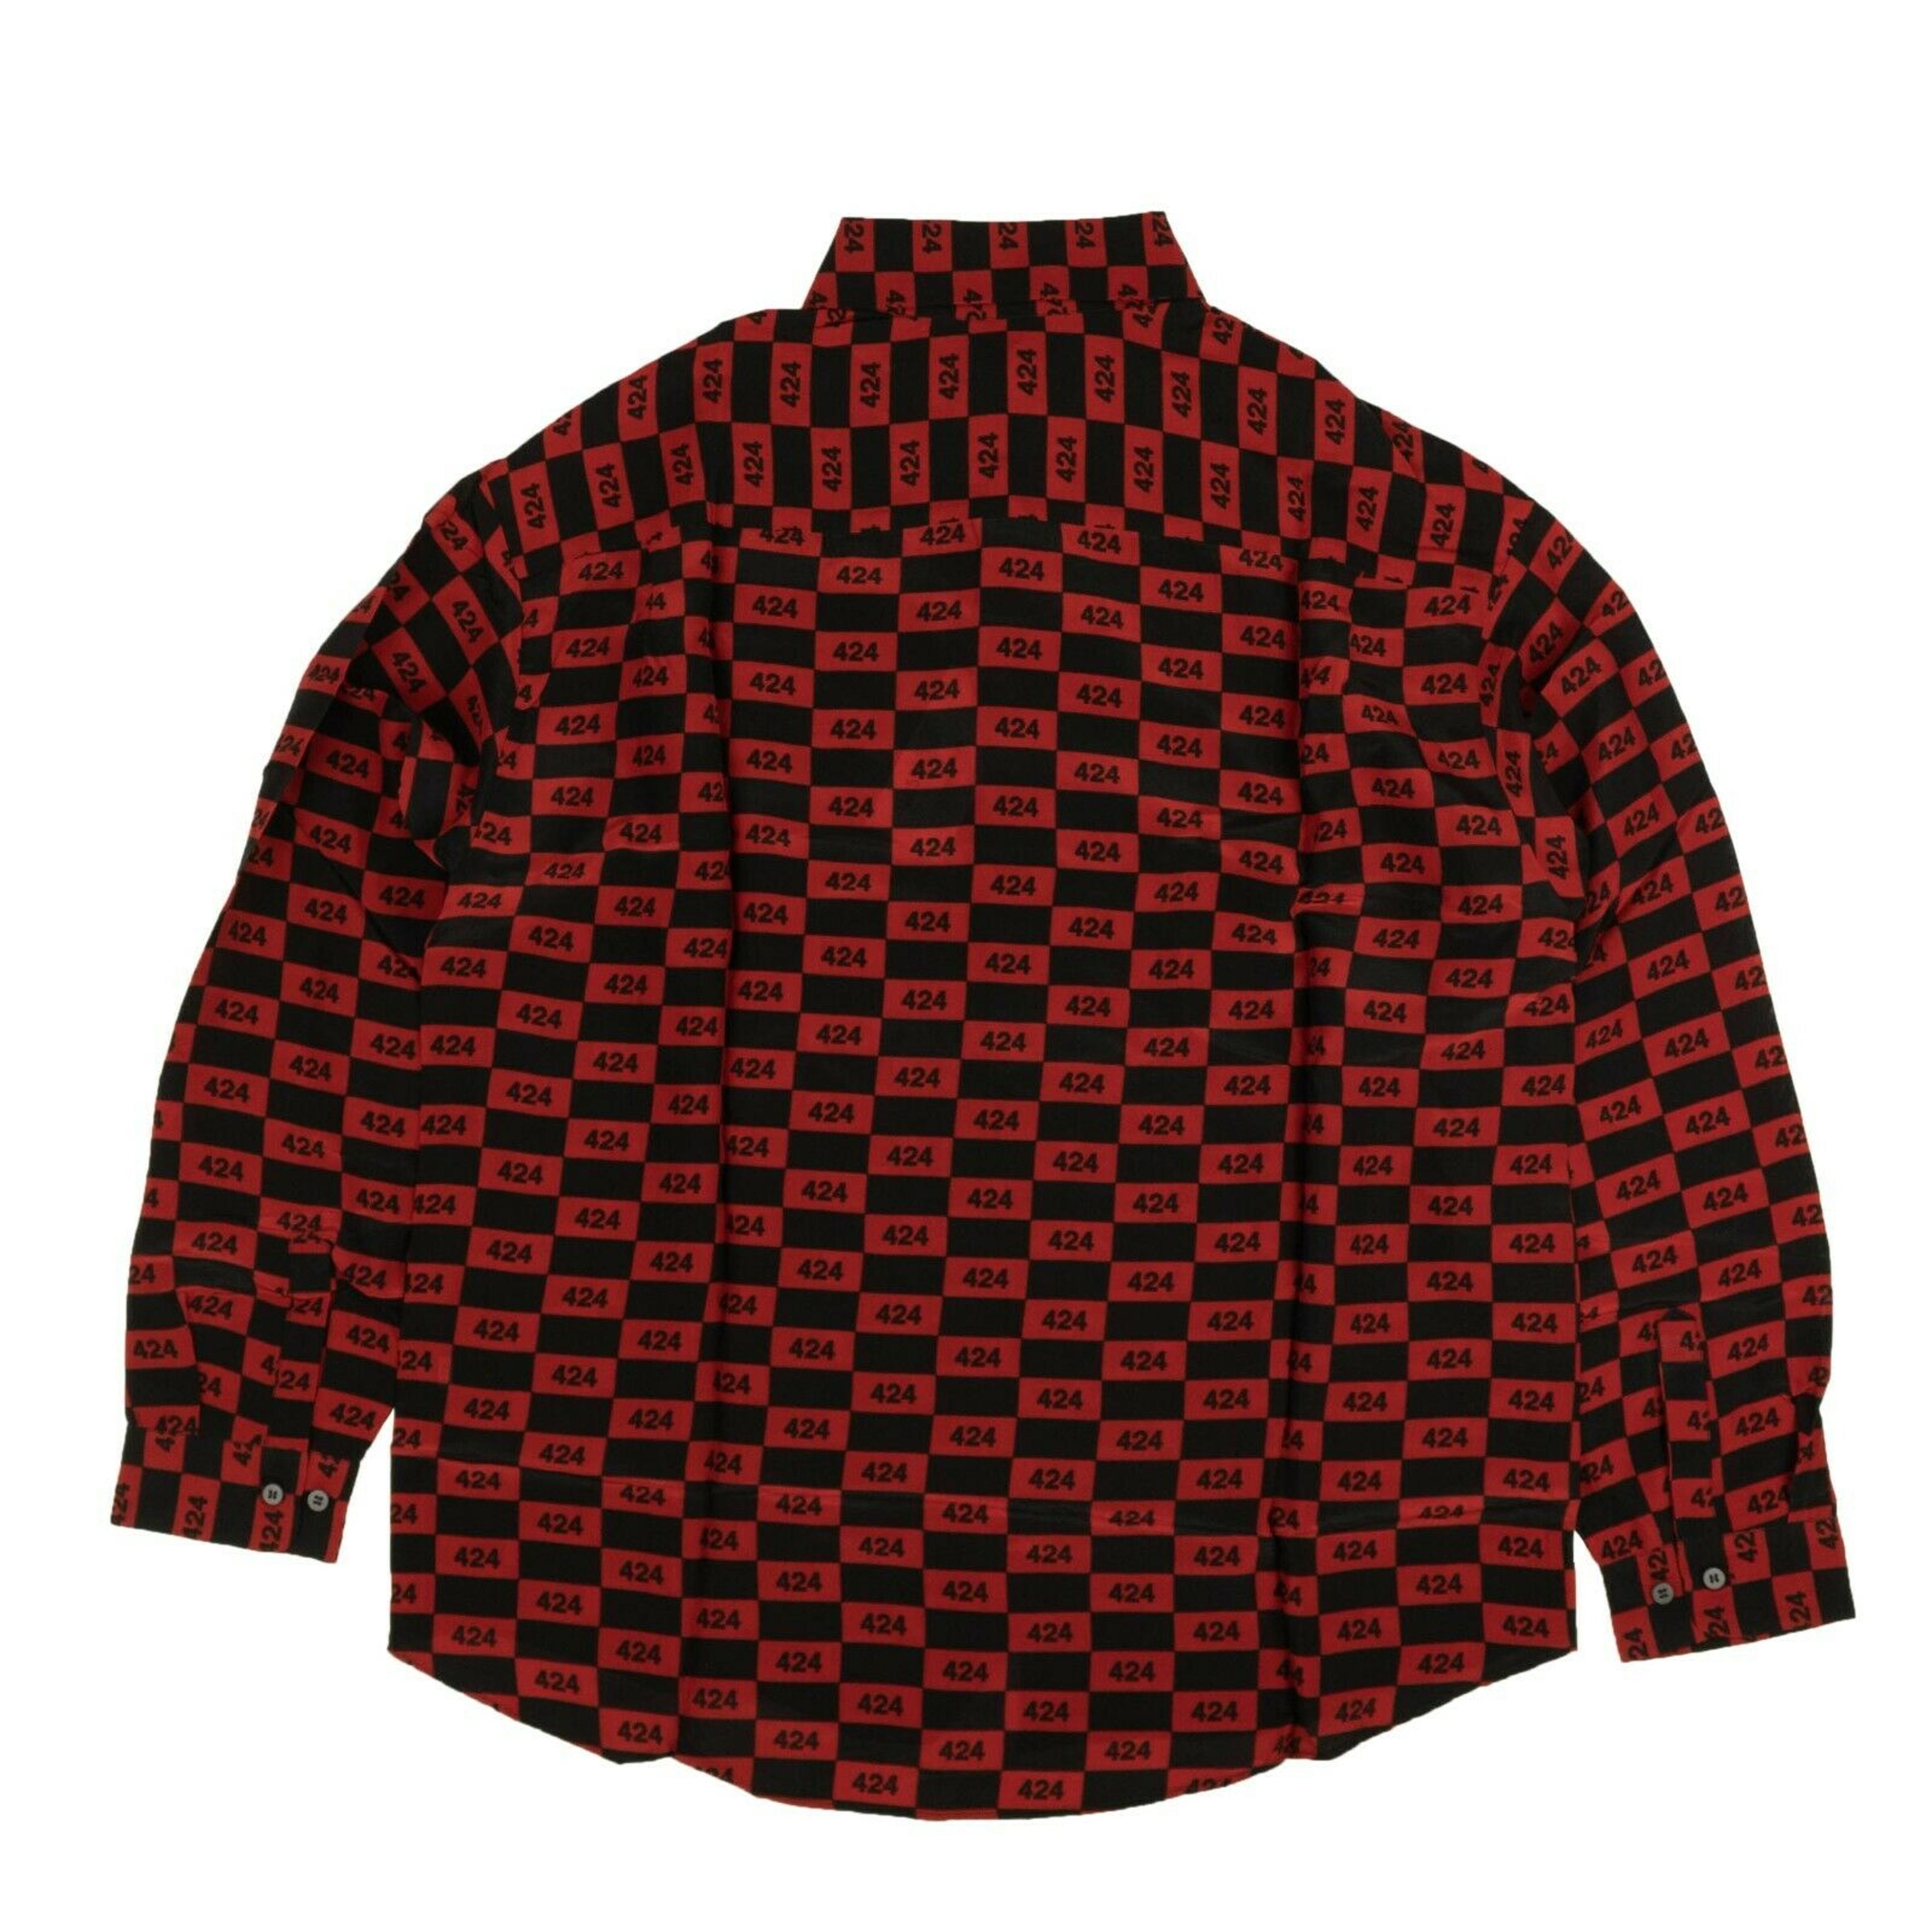 Alternate View 1 of 424 On Fairfax Logo Button Down Shirt - Red/Black